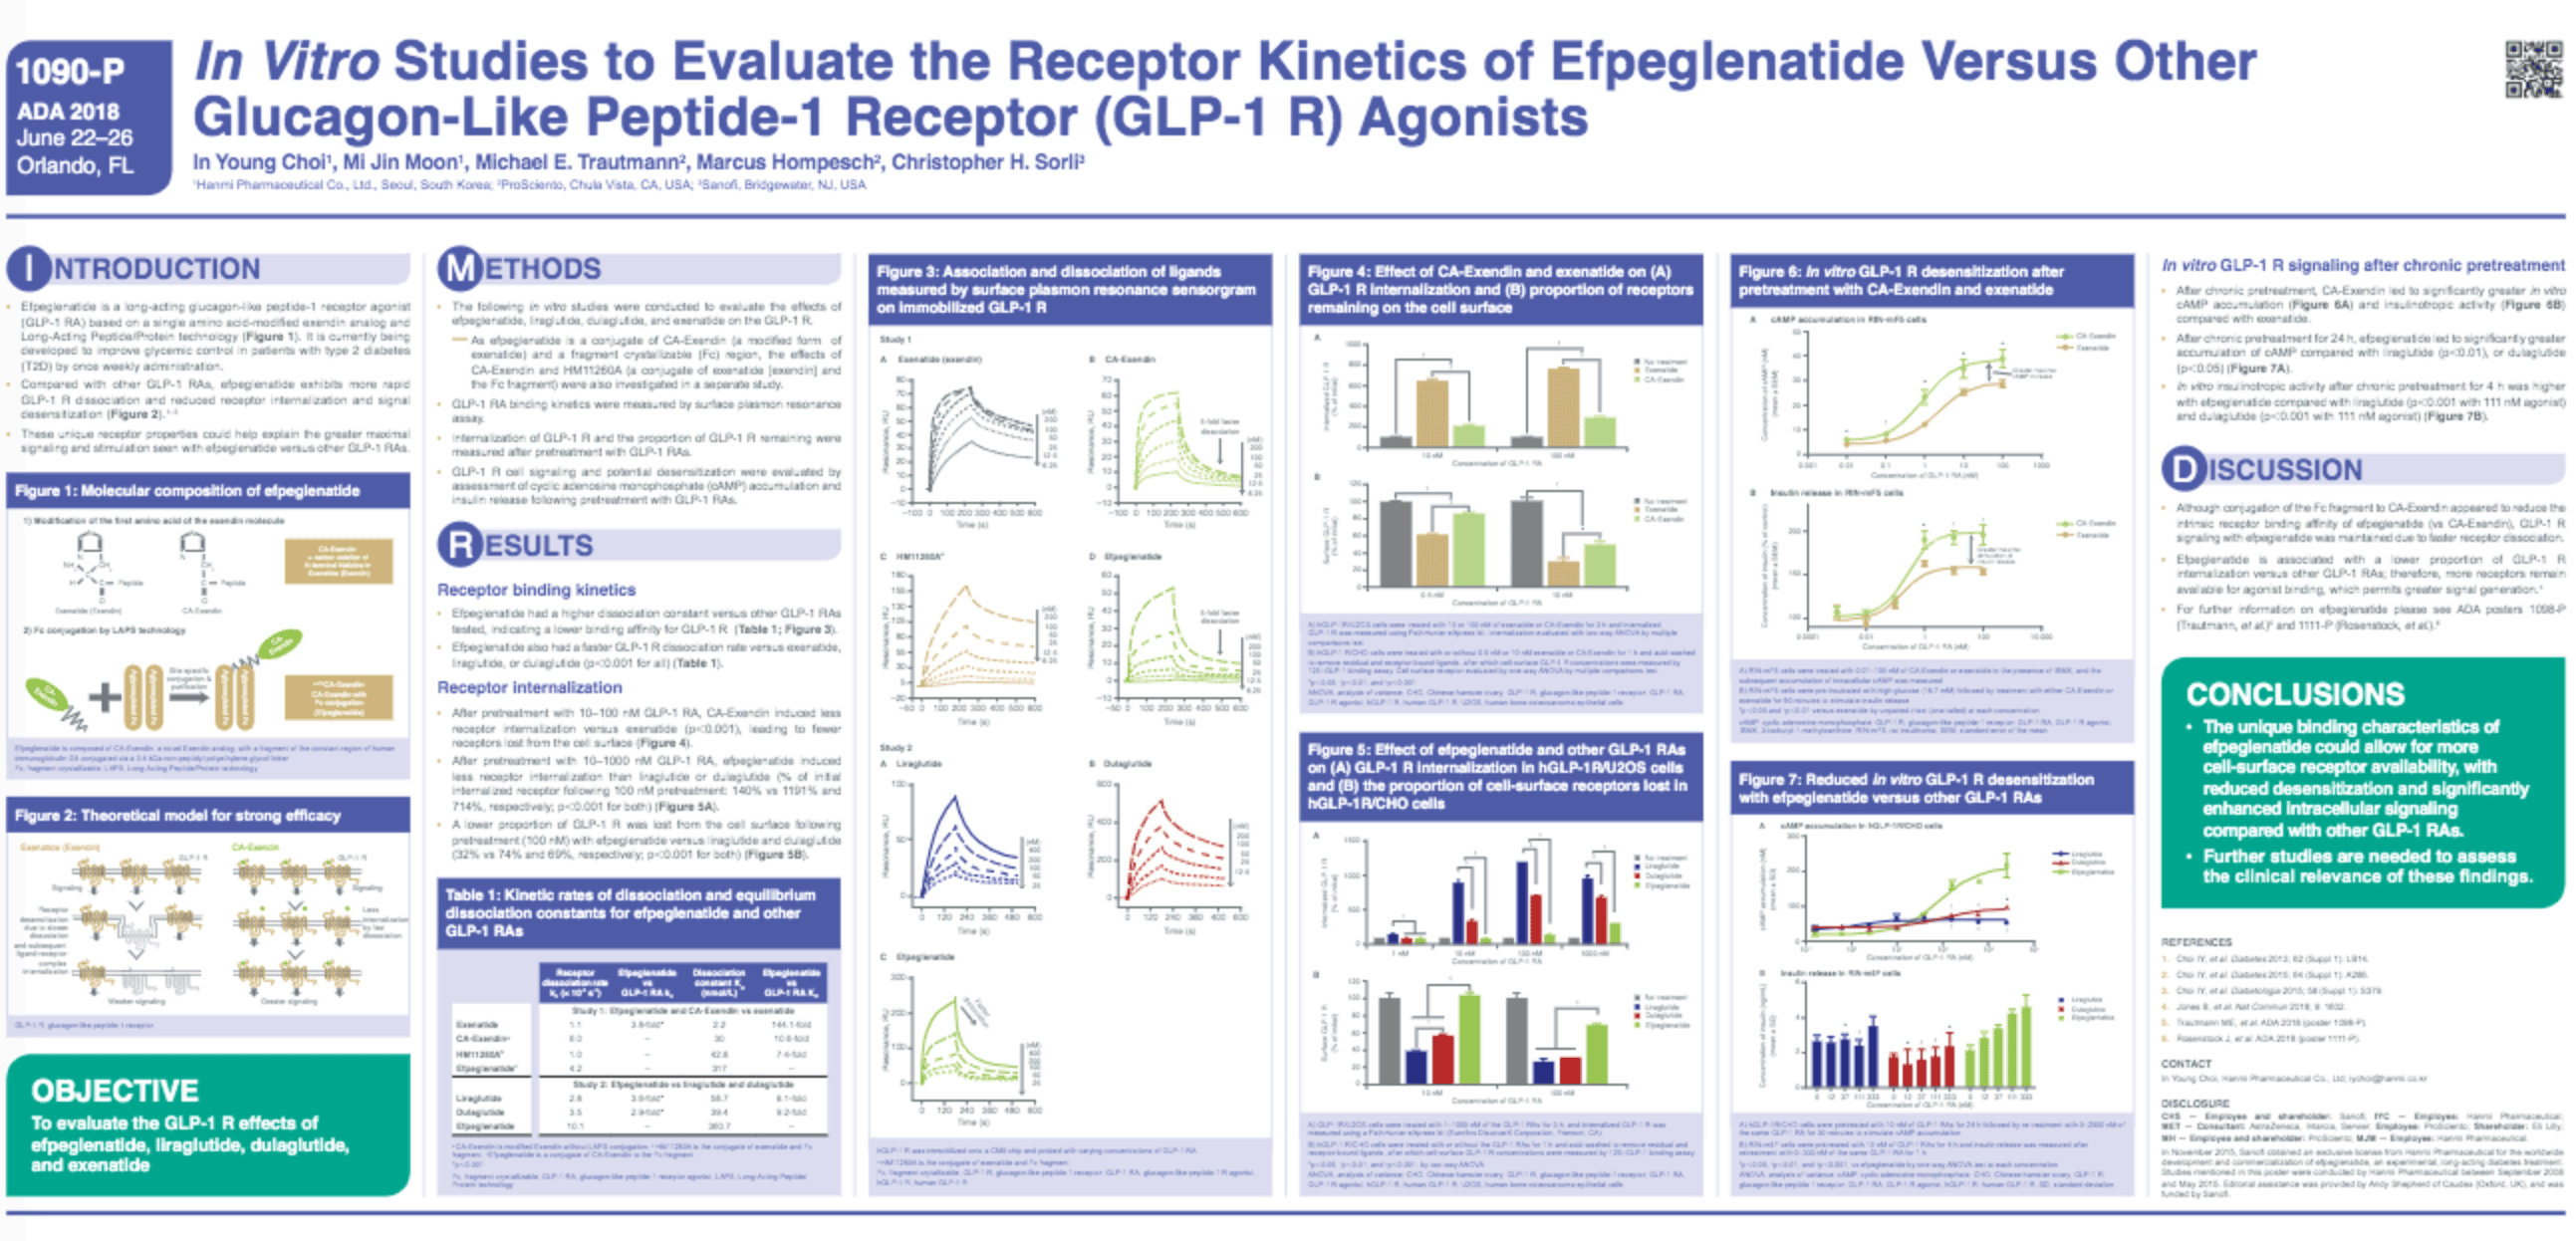 image of In Vitro Studies to Evaluate the Receptor Kinetics of Efpeglenatide vs. Other Glucagon-Like Peptide-1 Receptor (GLP-1R) Agonists